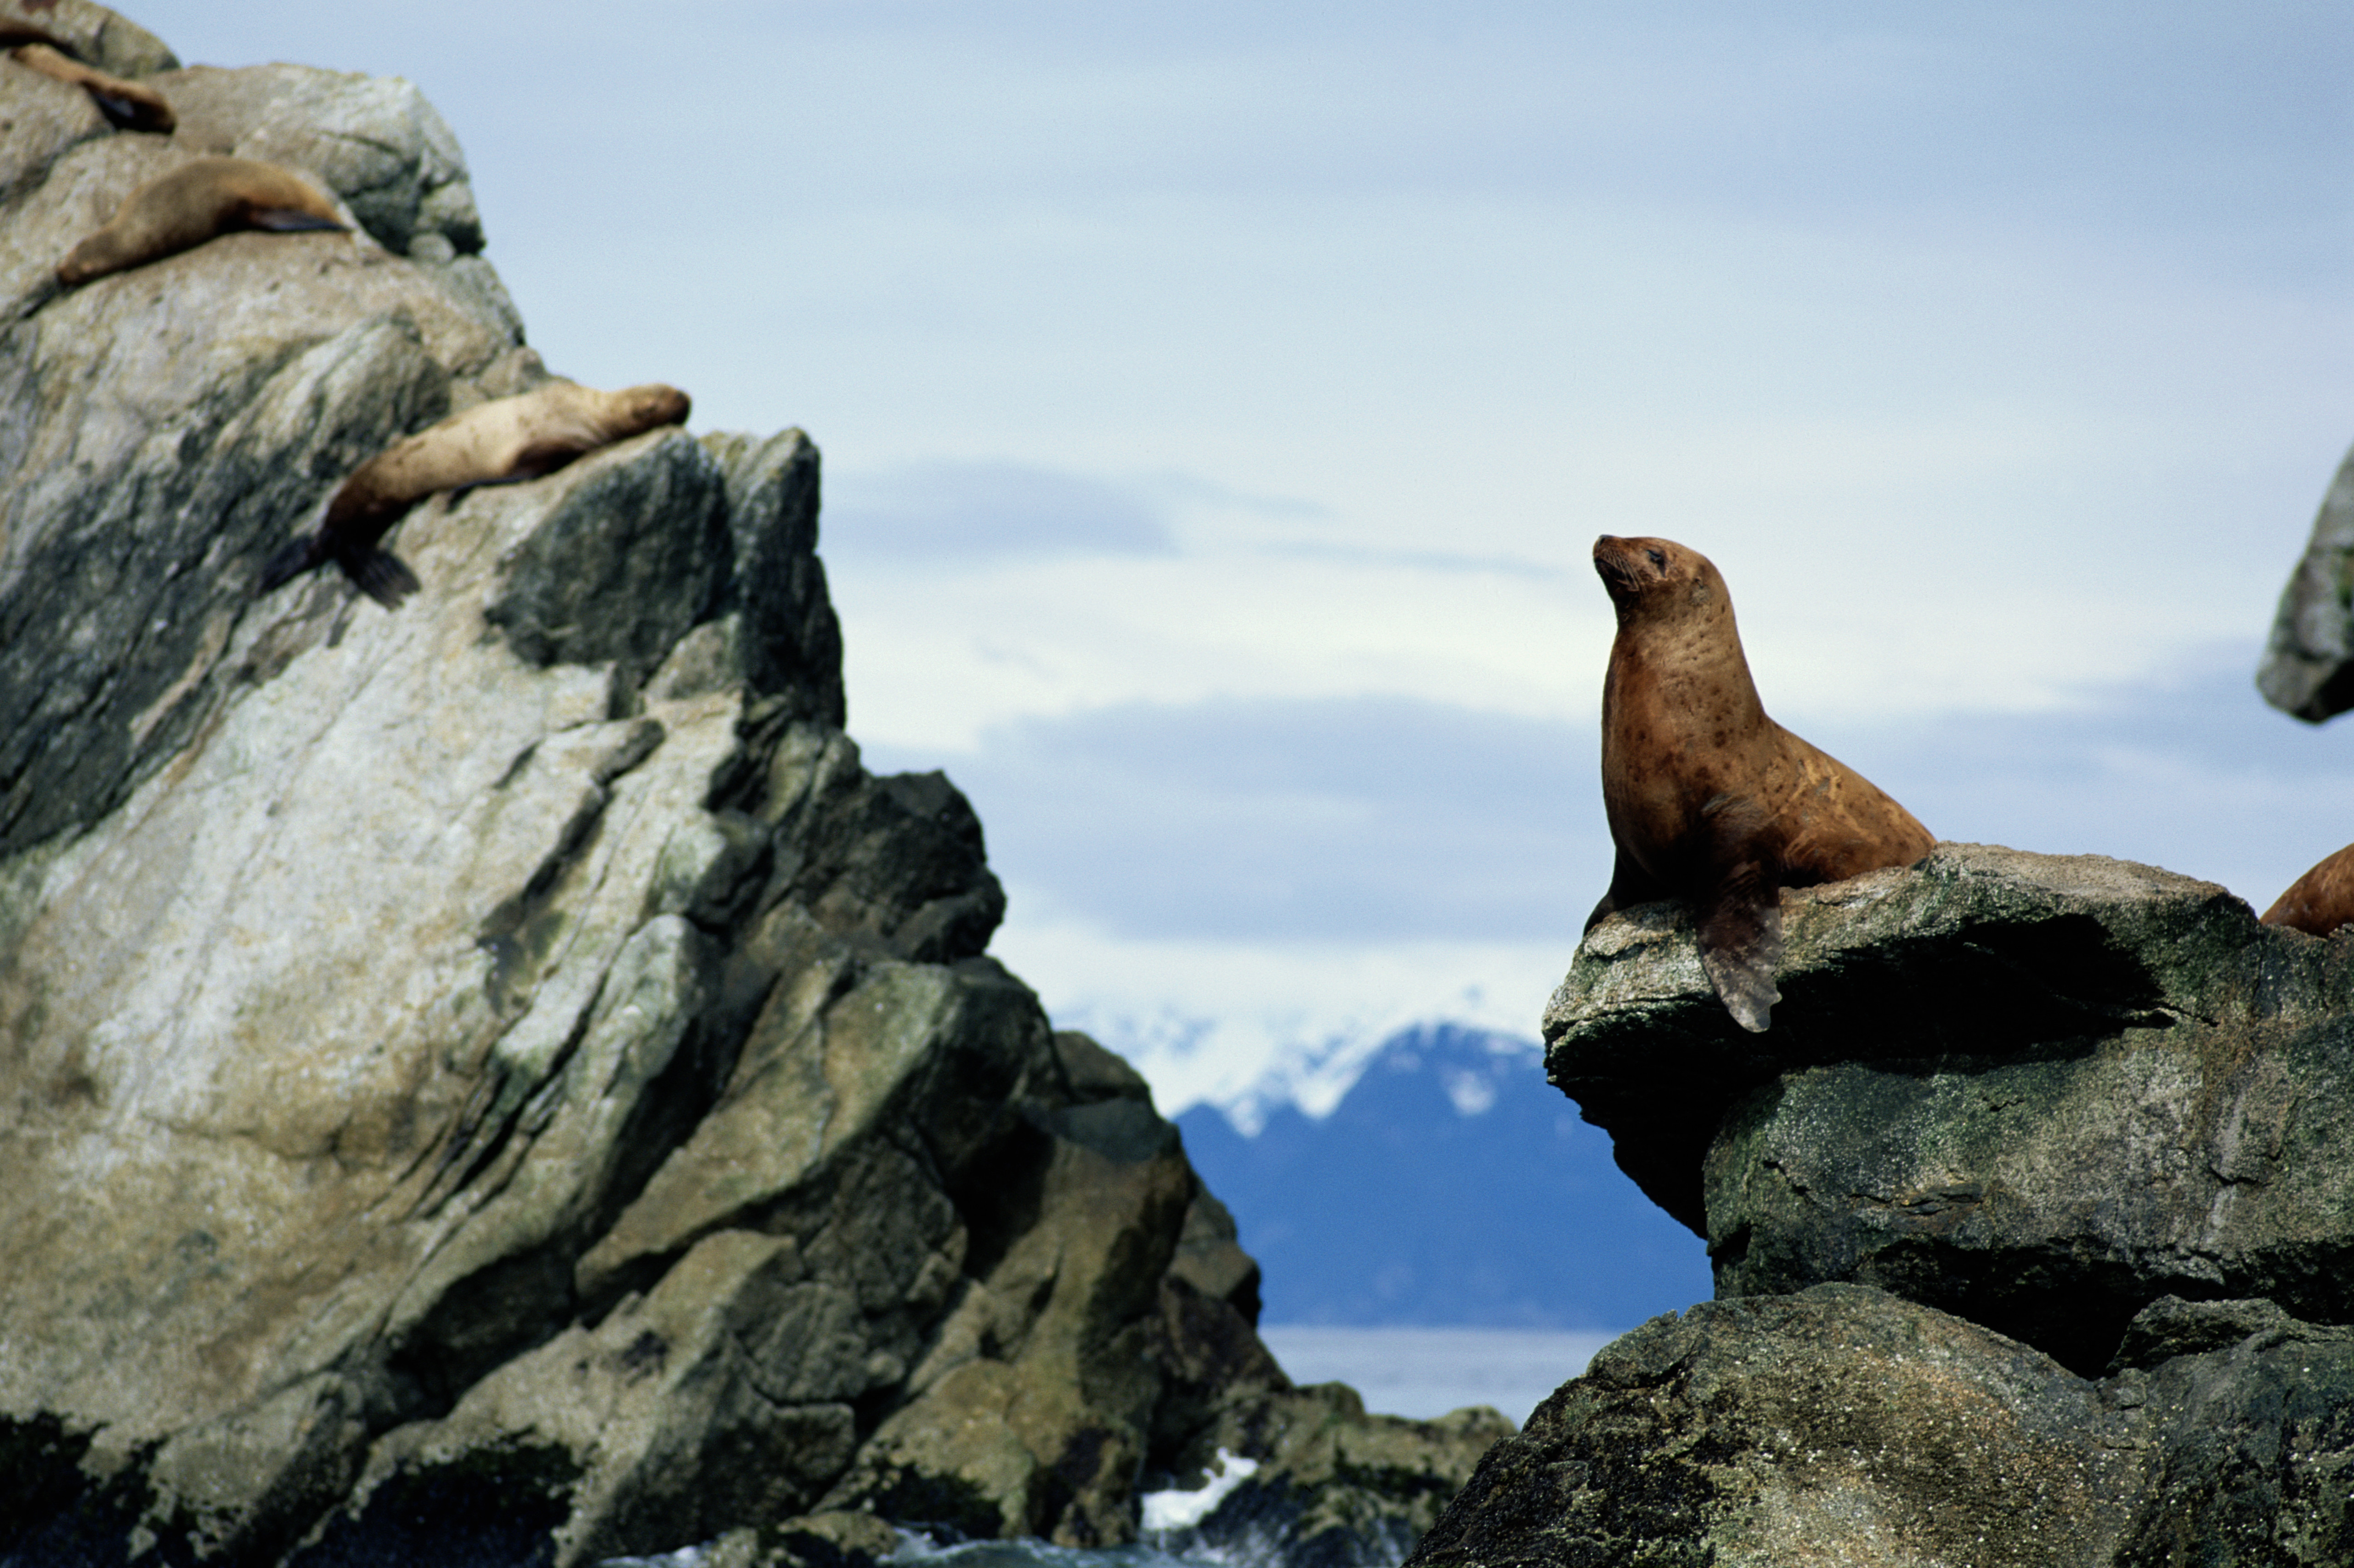 Steller's sea Lion (Eumetopiasjubatus) preparing to dive, Kenai Fjords